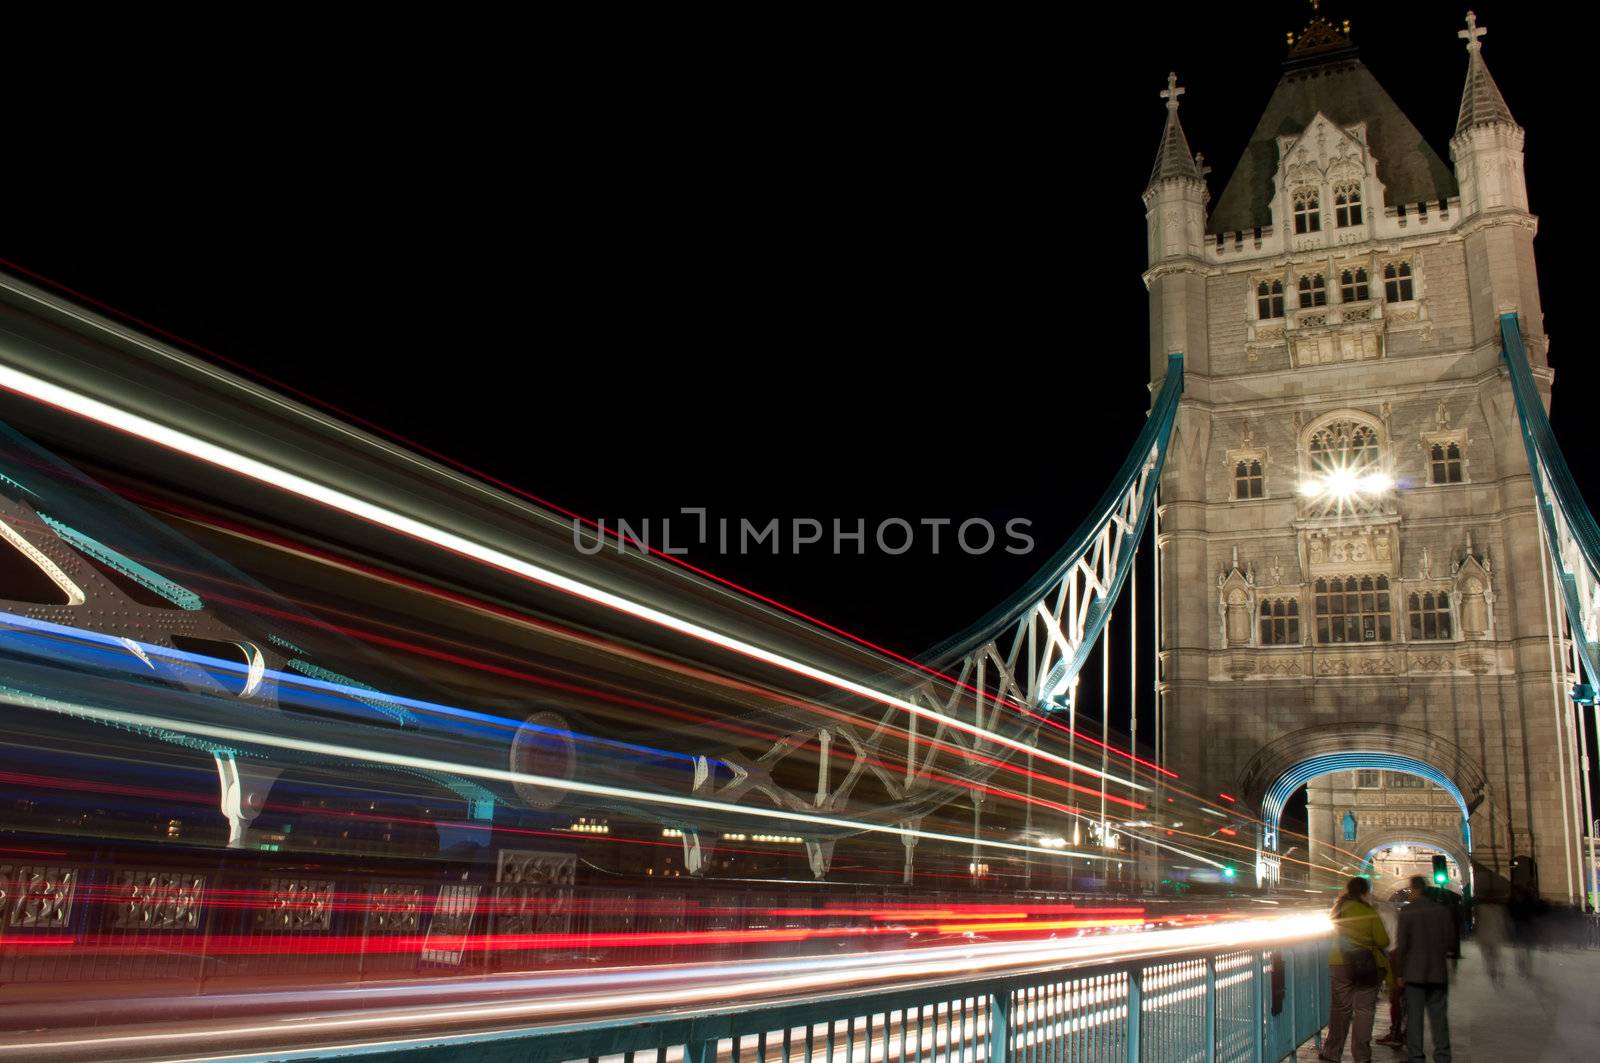 Traffic tail lights on London's tower bridge